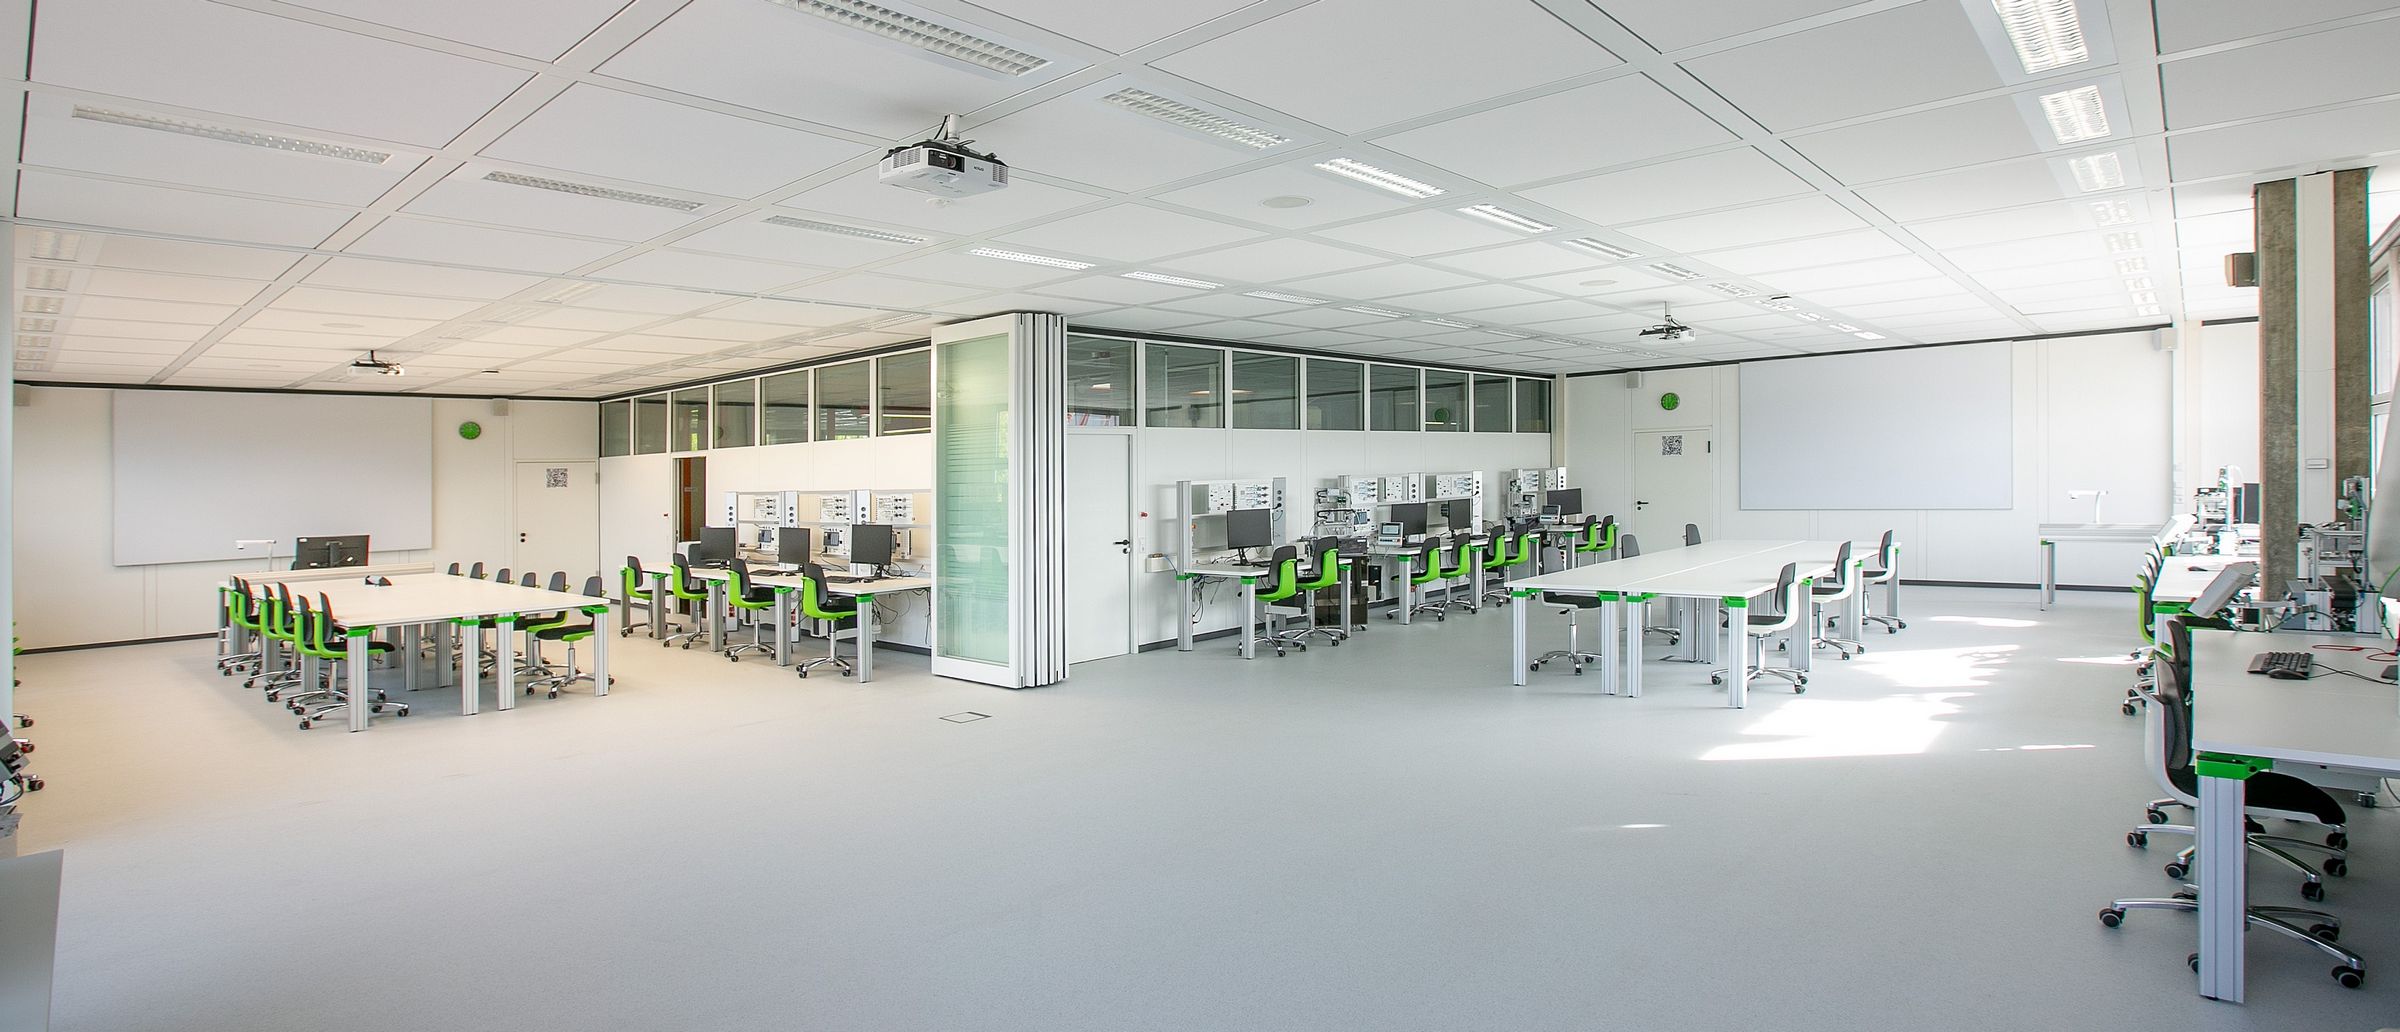 IoT-Lab der Friedrich-Ebert-Schule Esslingen